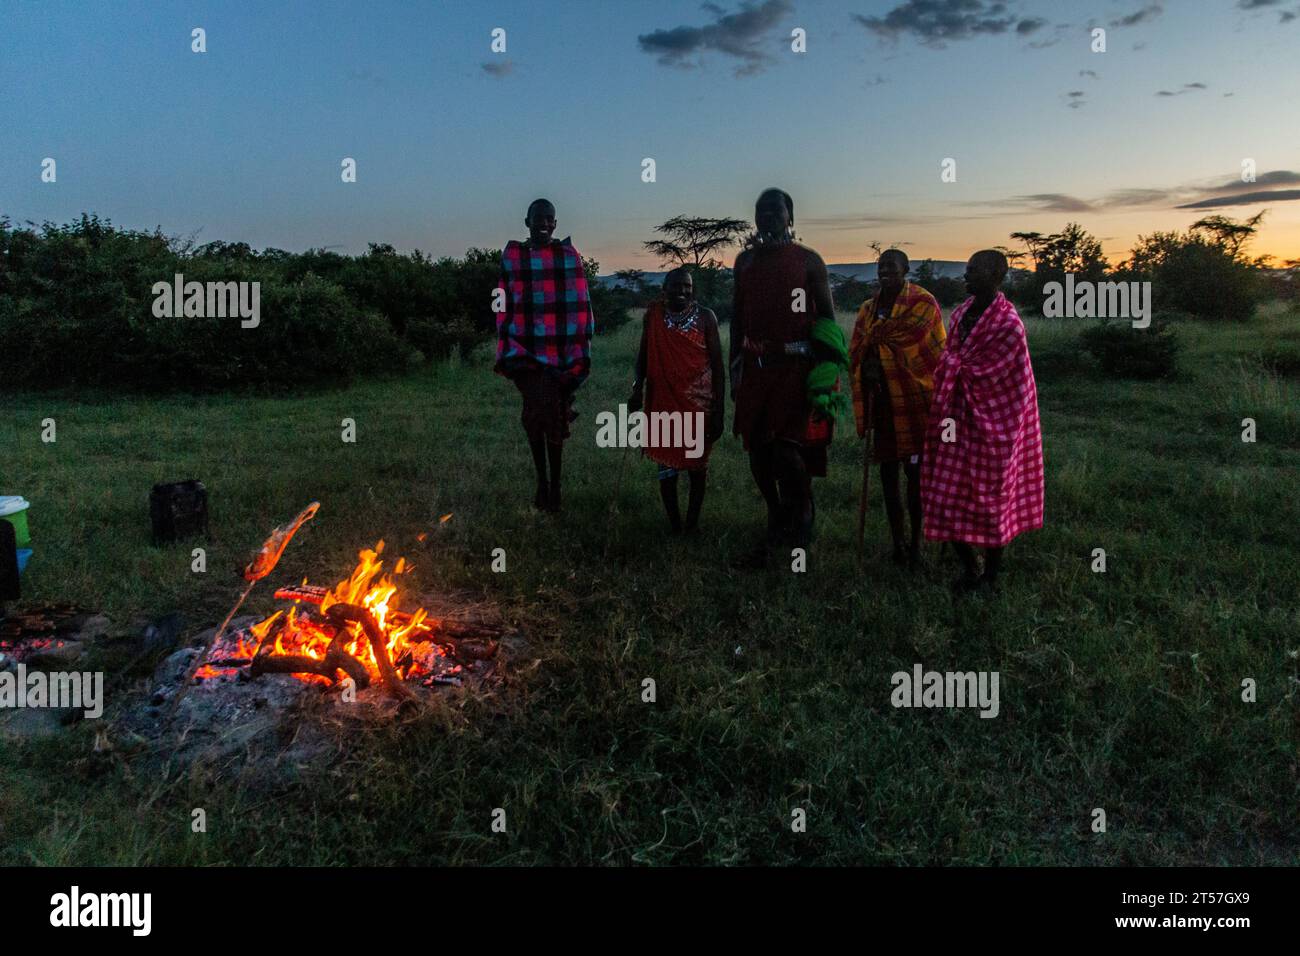 MASAI MARA, KENYA - FEBRUARY 20, 2020: Masai men performing their Jumping Dance next to a bonfire, Kenya Stock Photo